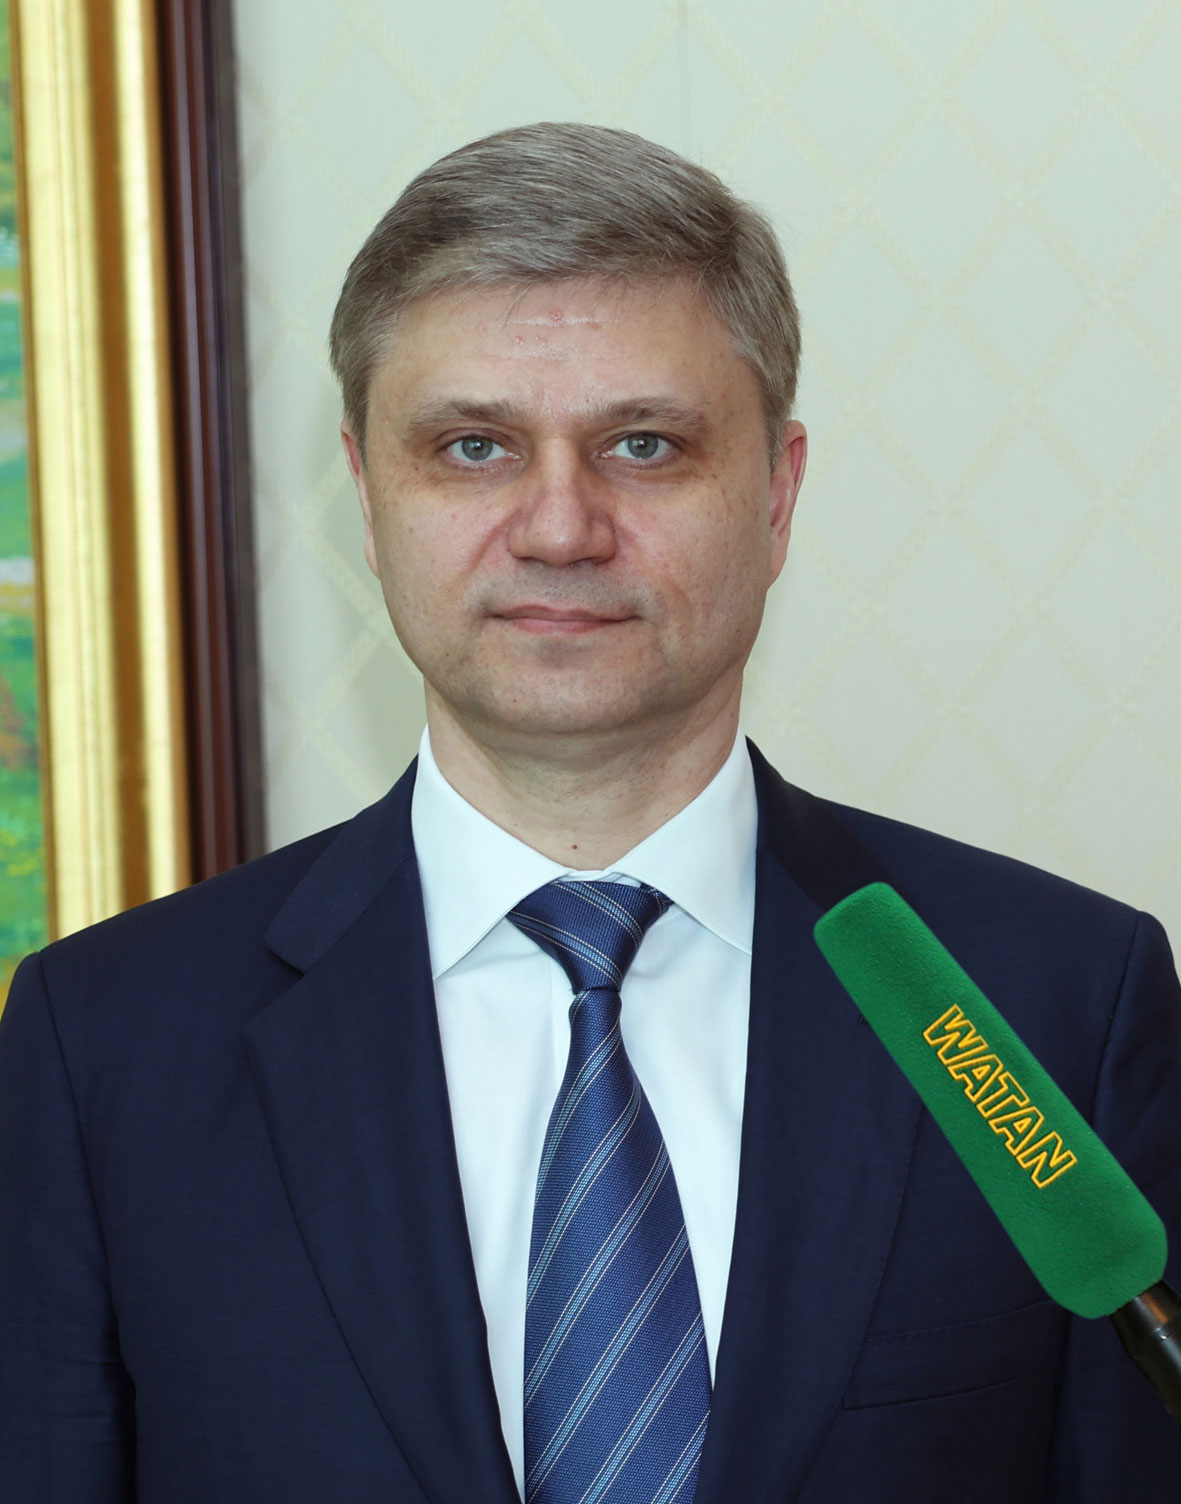 President of Turkmenistan received the head of JSC “Russian Railways”